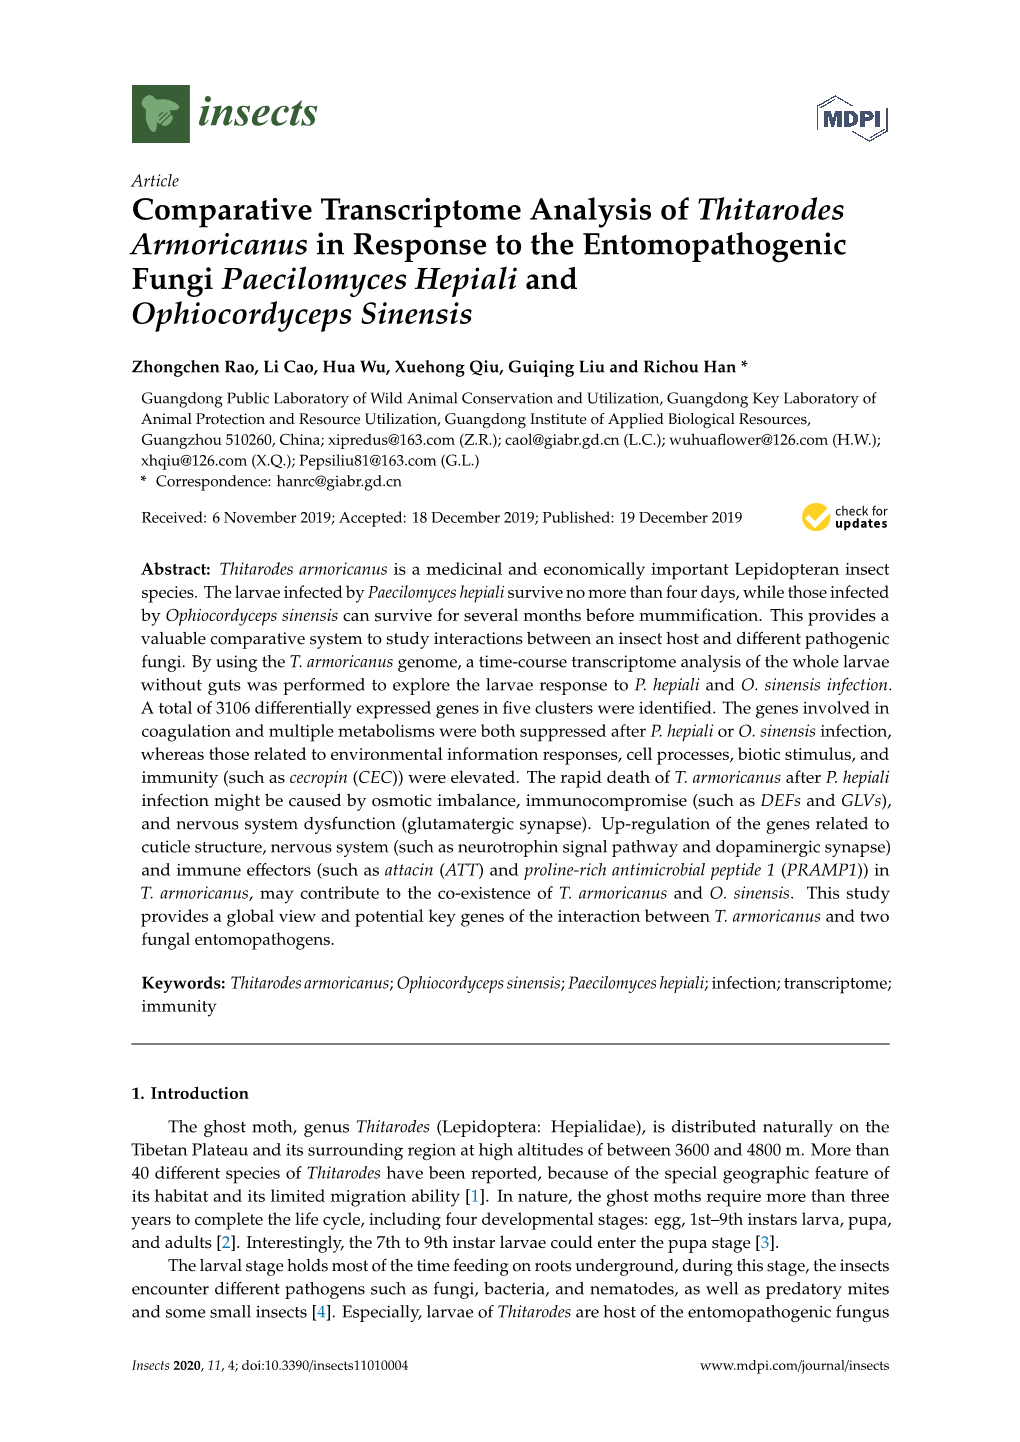 Comparative Transcriptome Analysis of Thitarodes Armoricanus in Response to the Entomopathogenic Fungi Paecilomyces Hepiali and Ophiocordyceps Sinensis